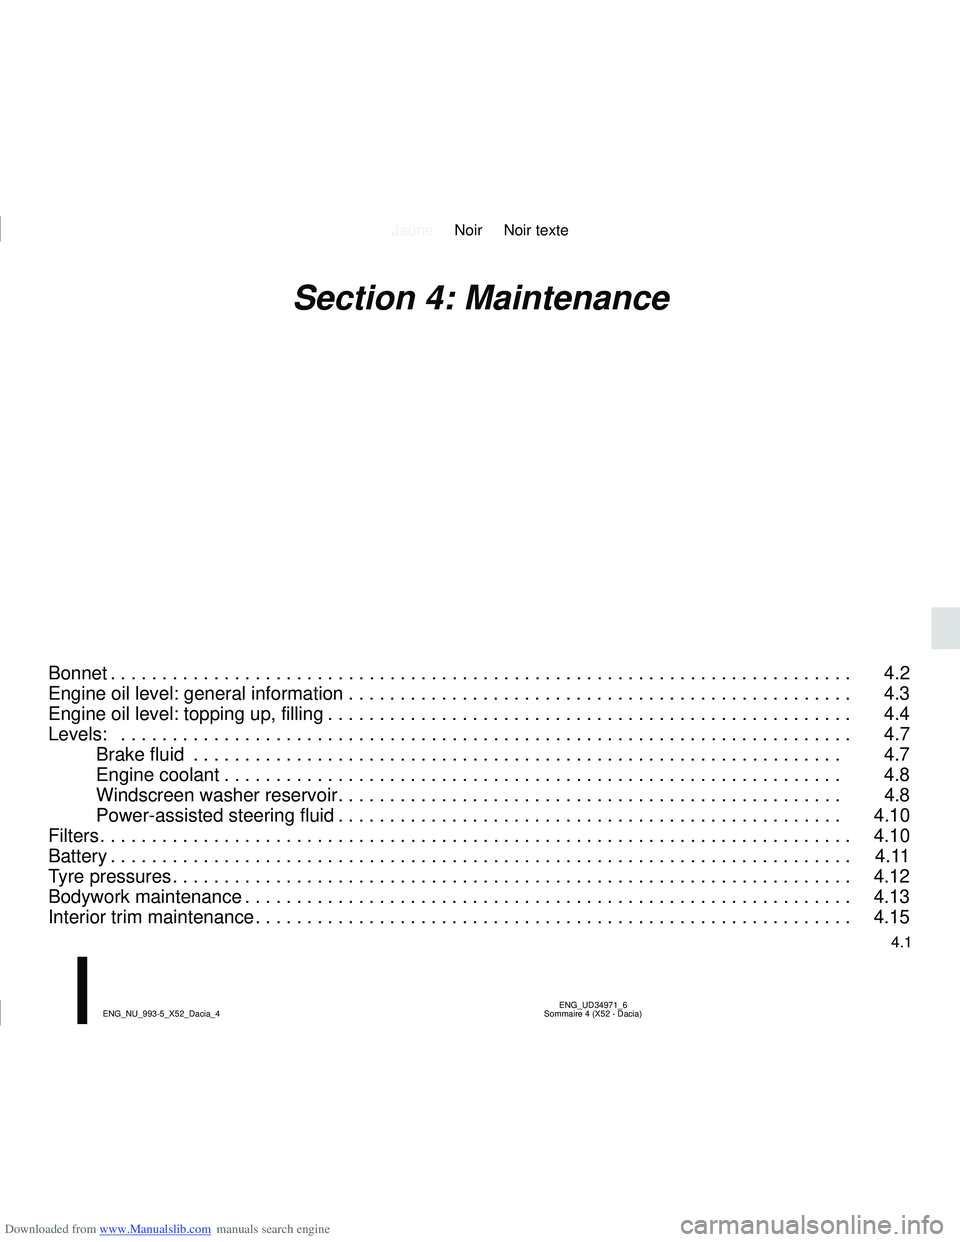 DACIA SANDERO 2014  Owners Manual Downloaded from www.Manualslib.com manuals search engine JauneNoir Noir texte
4.1
ENG_UD34971_6
Sommaire 4 (X52 - Dacia)
ENG_NU_993-5_X52_Dacia_4
Section 4: Maintenance
Bonnet . . . . . . . . . . . . 